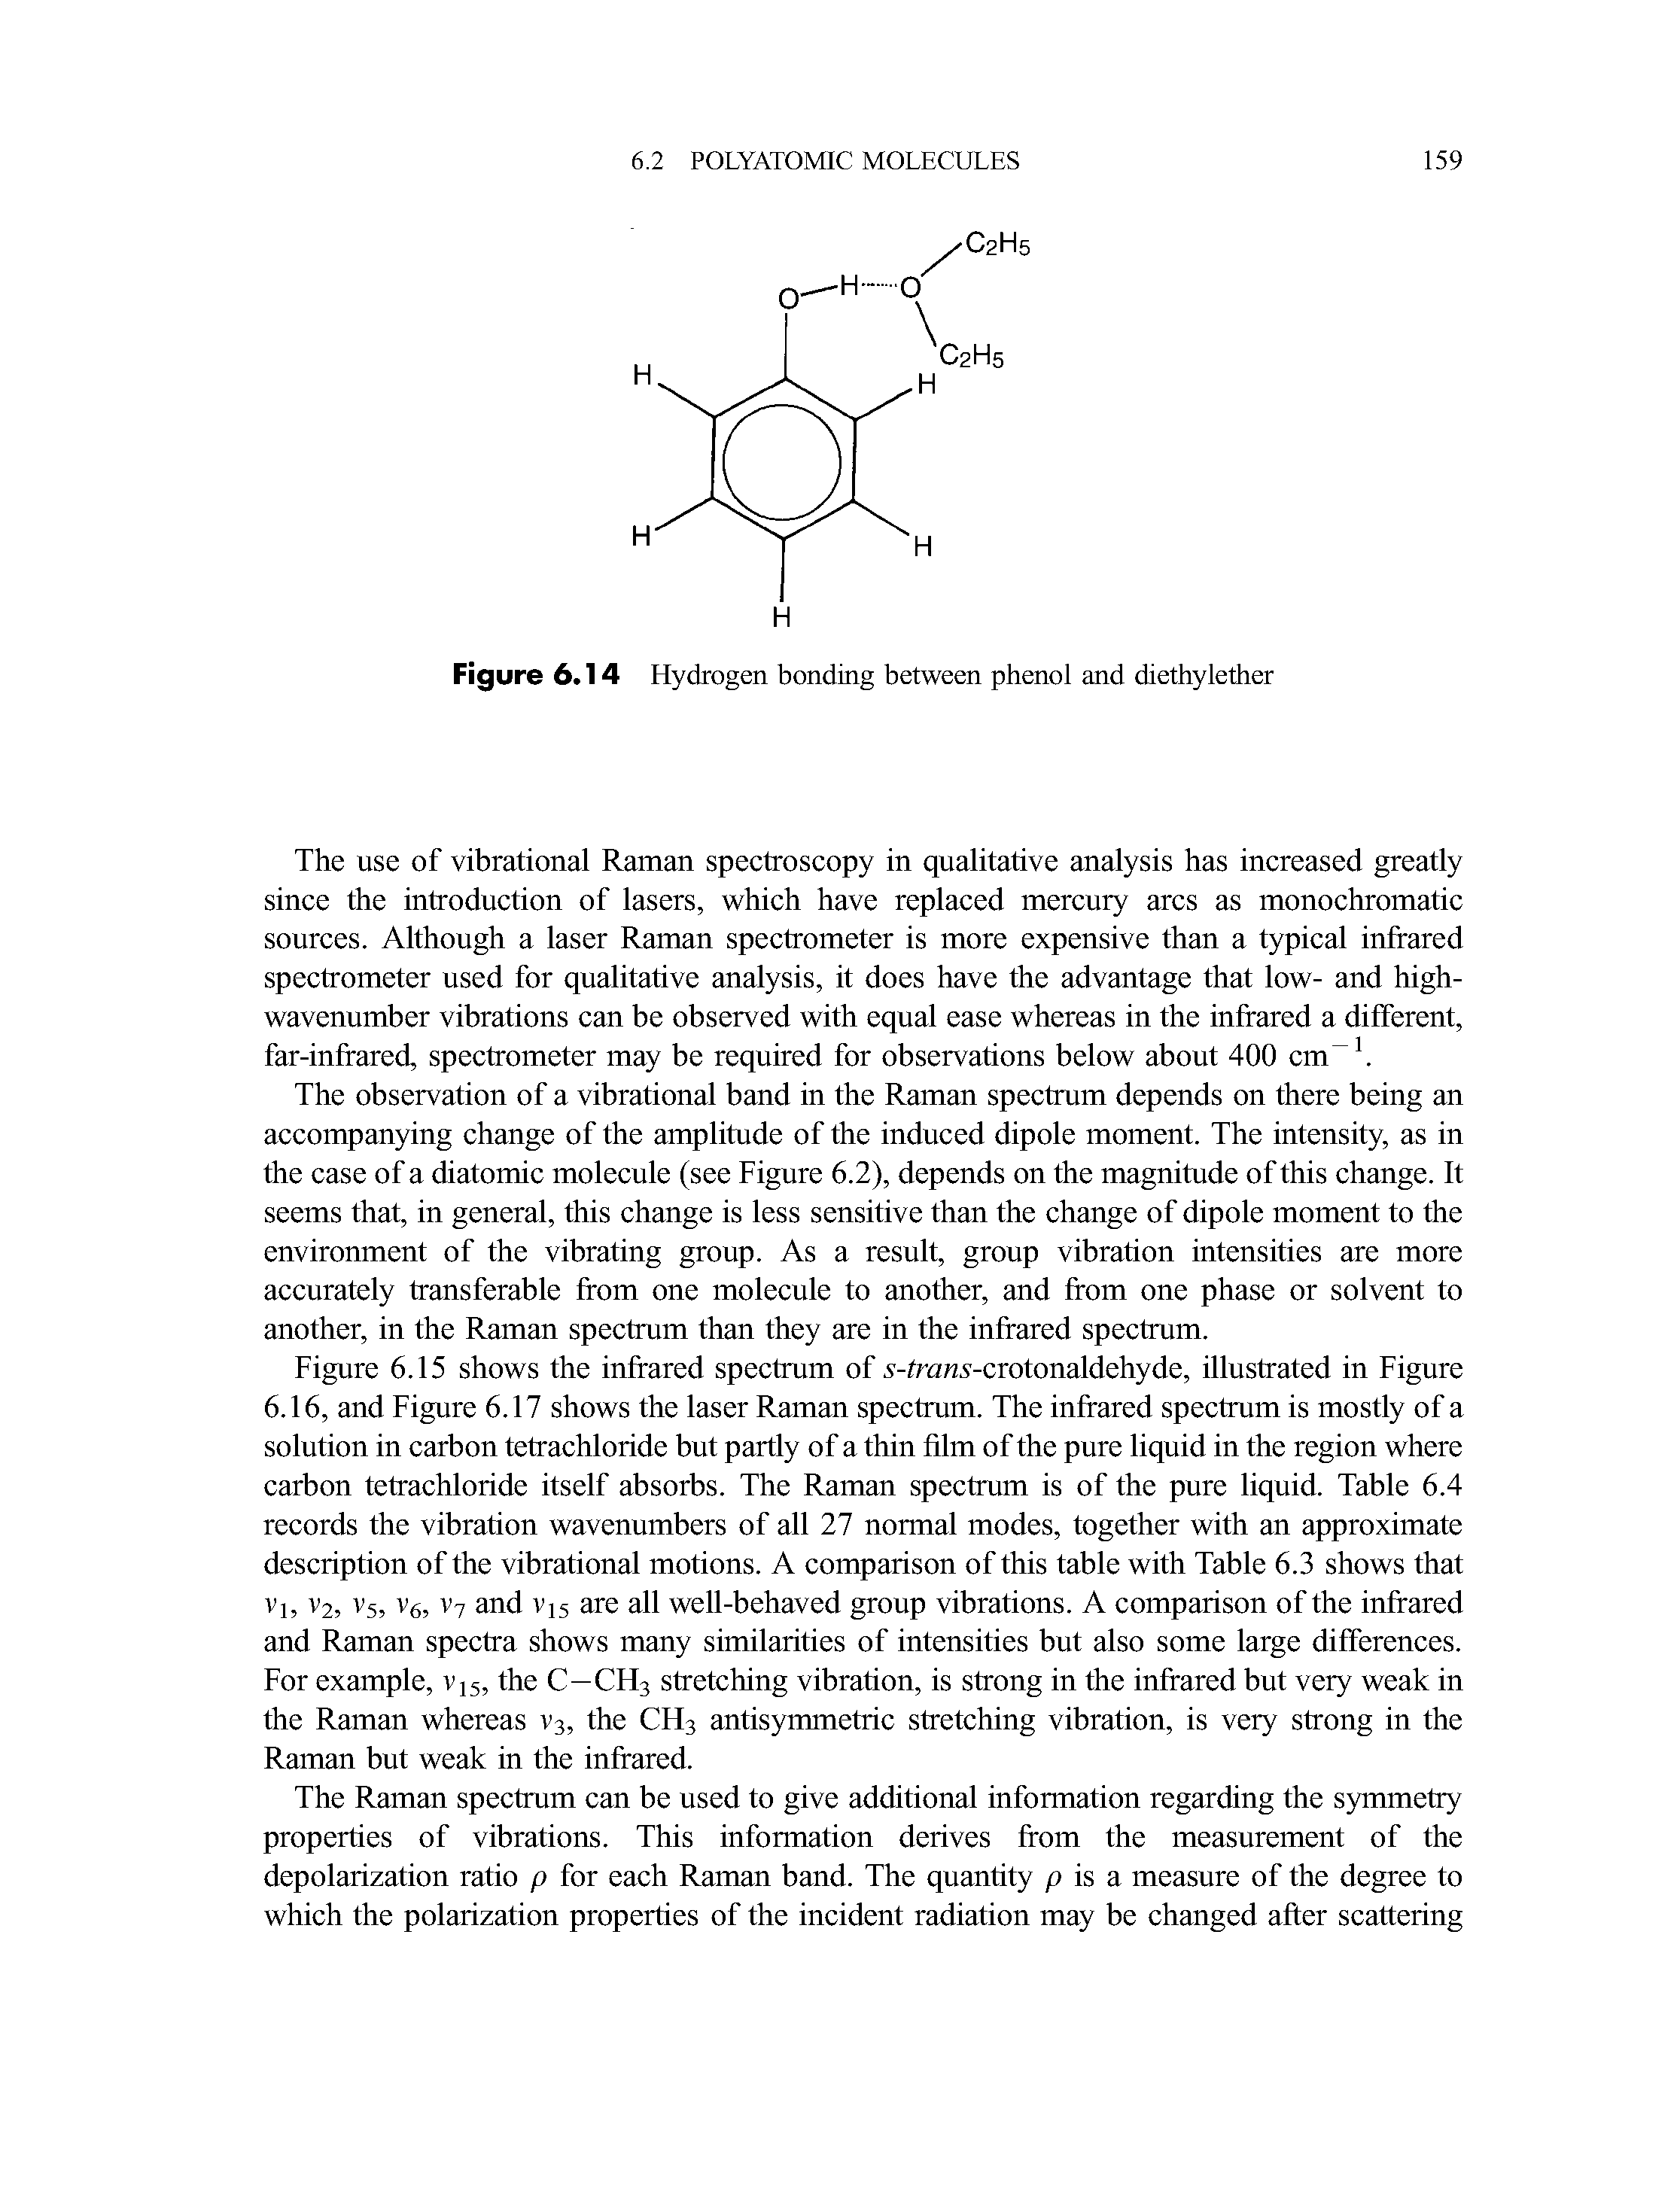 Figure 6.14 Hydrogen bonding between phenol and diethylether...